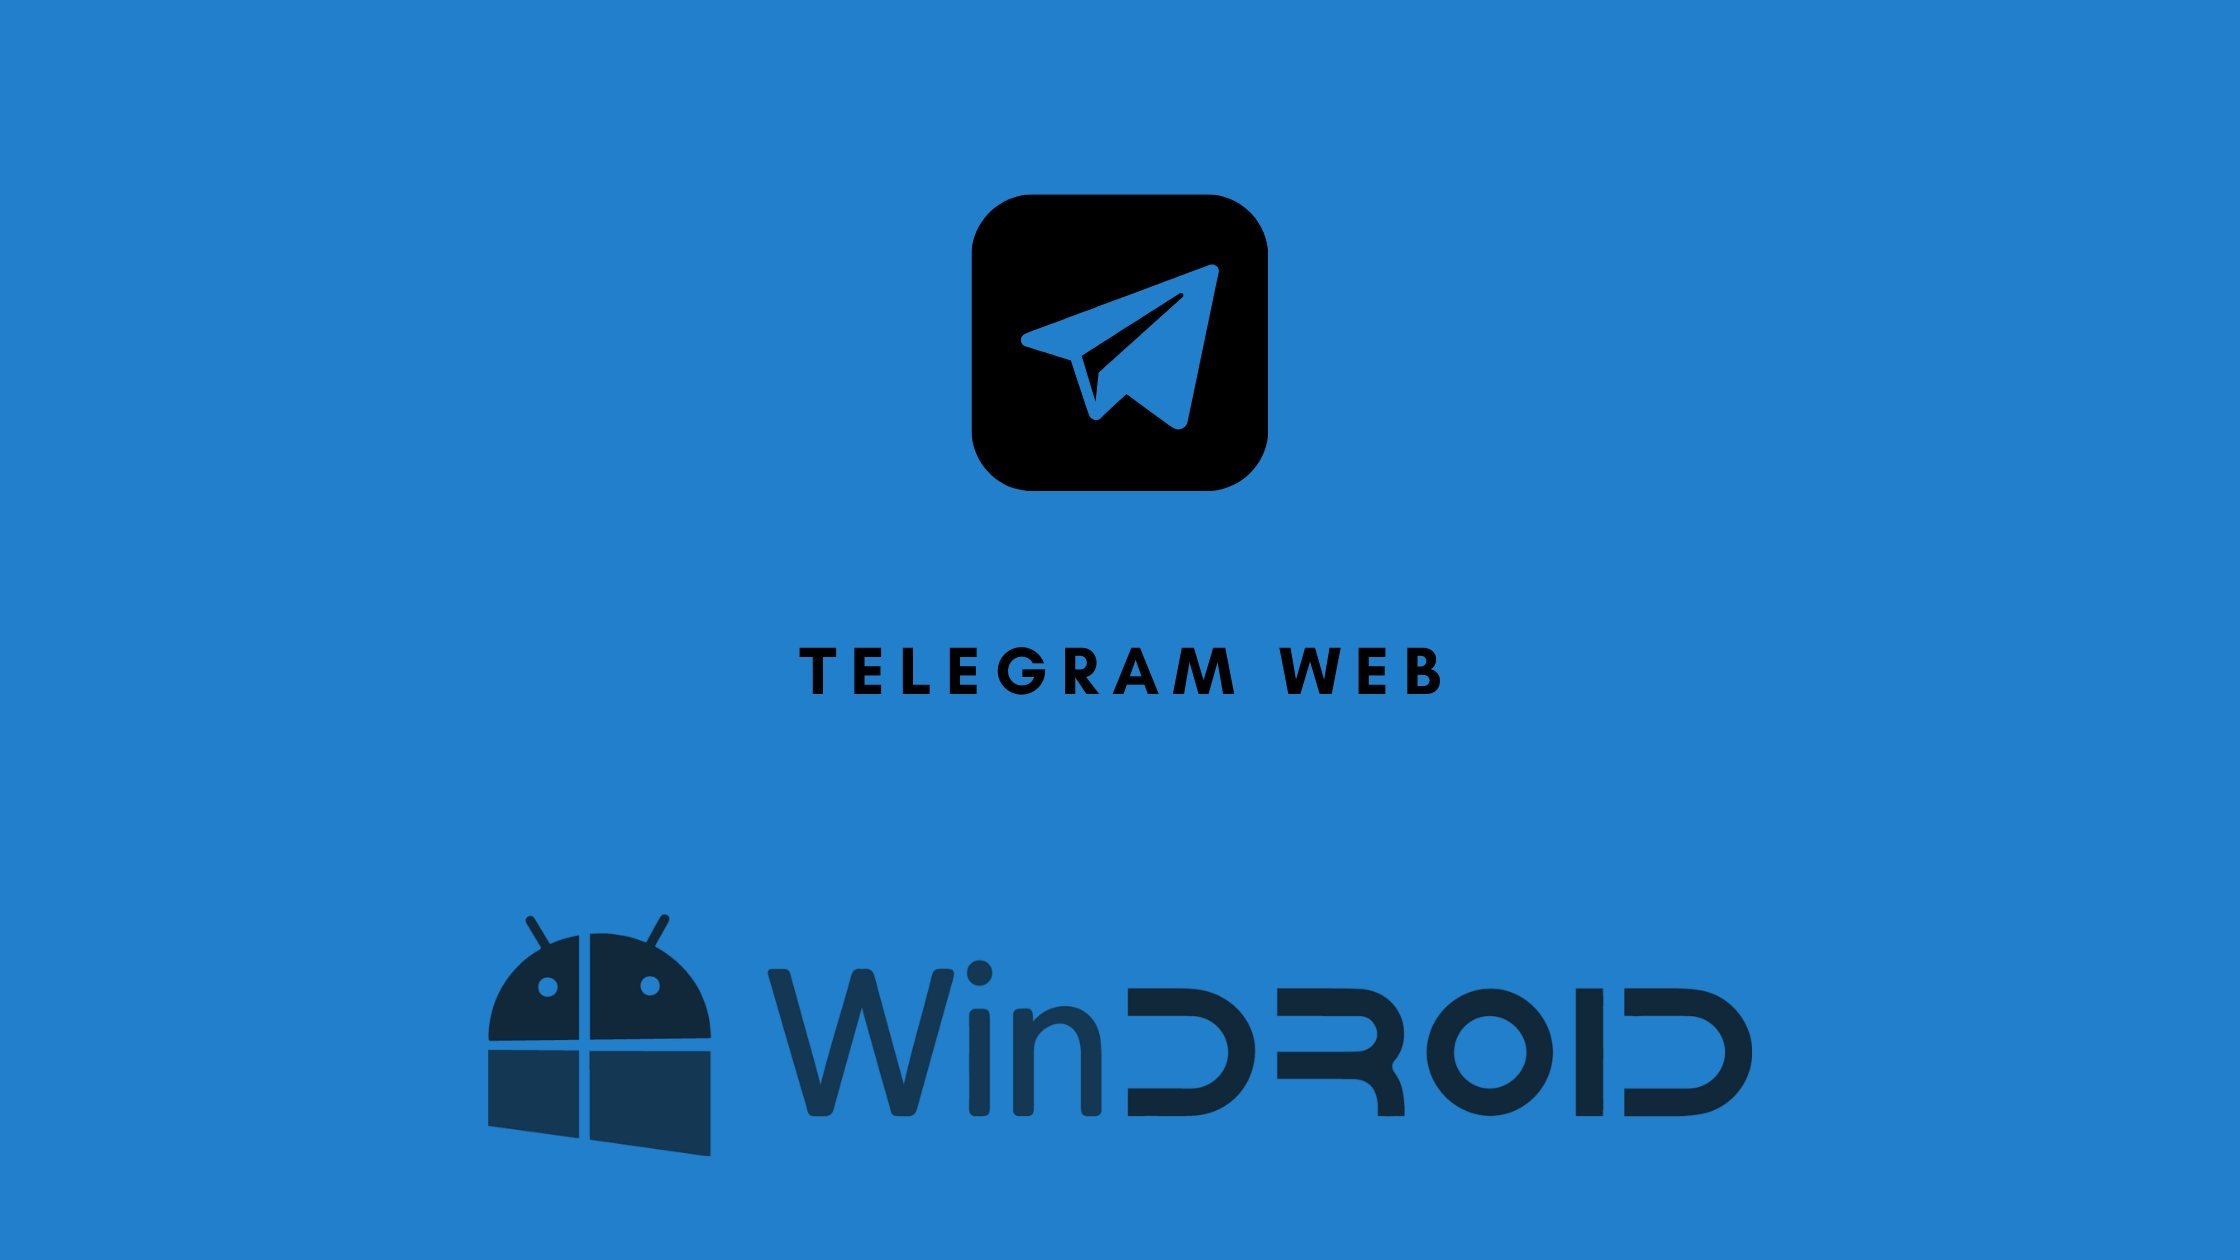 Телеграмм веб скачать бесплатно на андроид фото 108